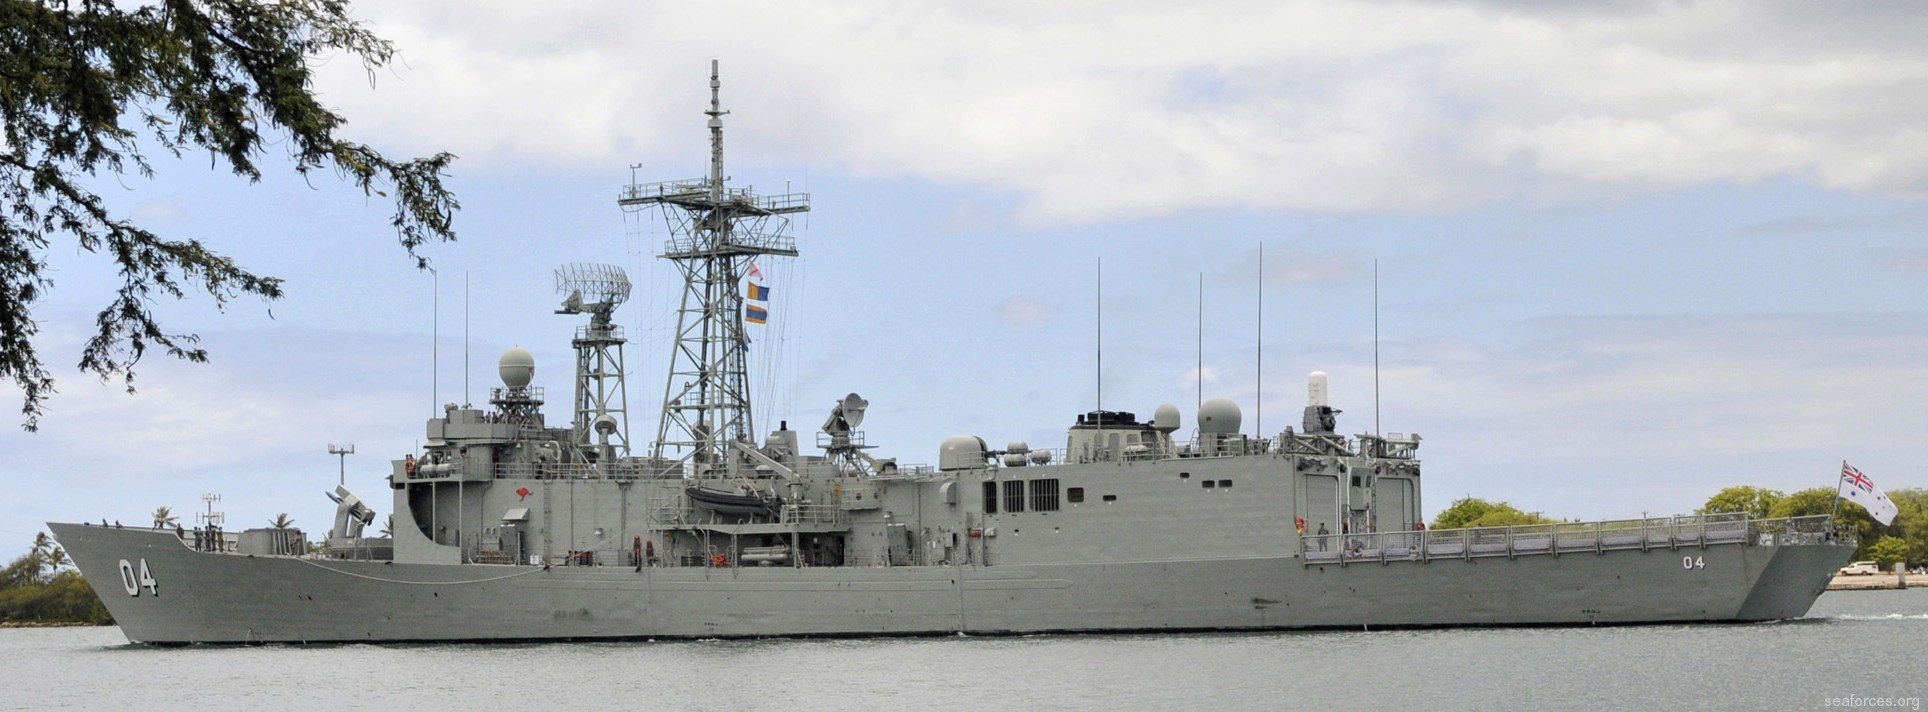 ffg-04 hmas darwin adelaide class frigate royal australian navy 2012 36 pearl harbor hawaii